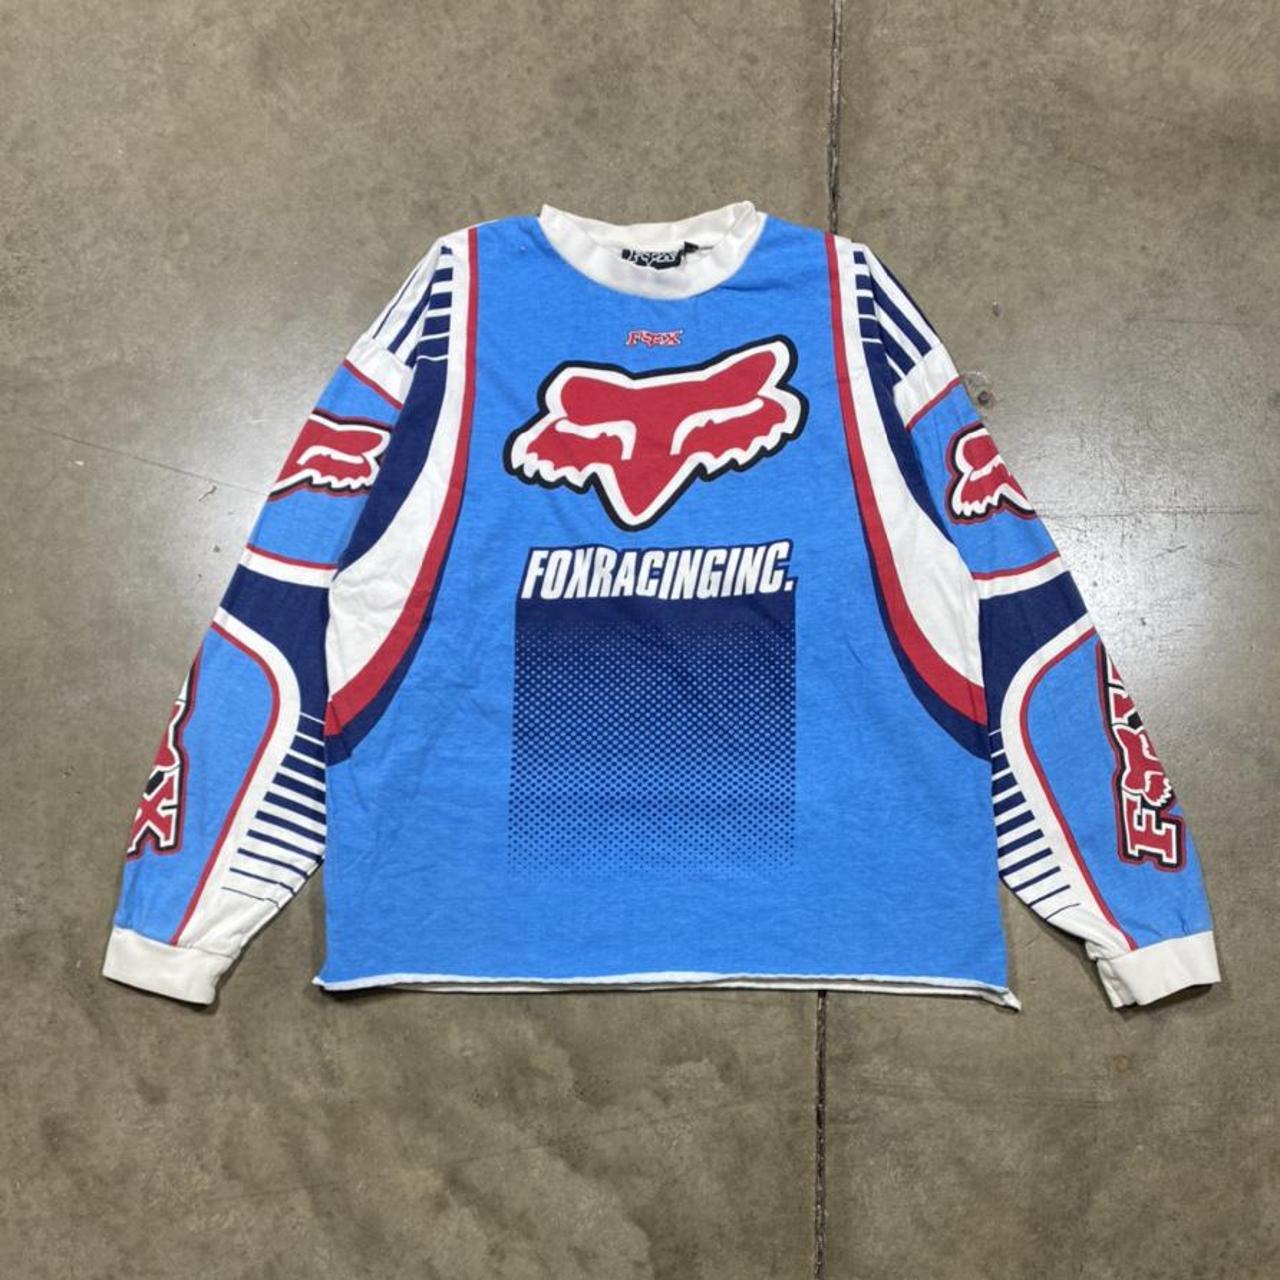 Product Image 1 - Vintage Fox Racing Motocross Jersey.